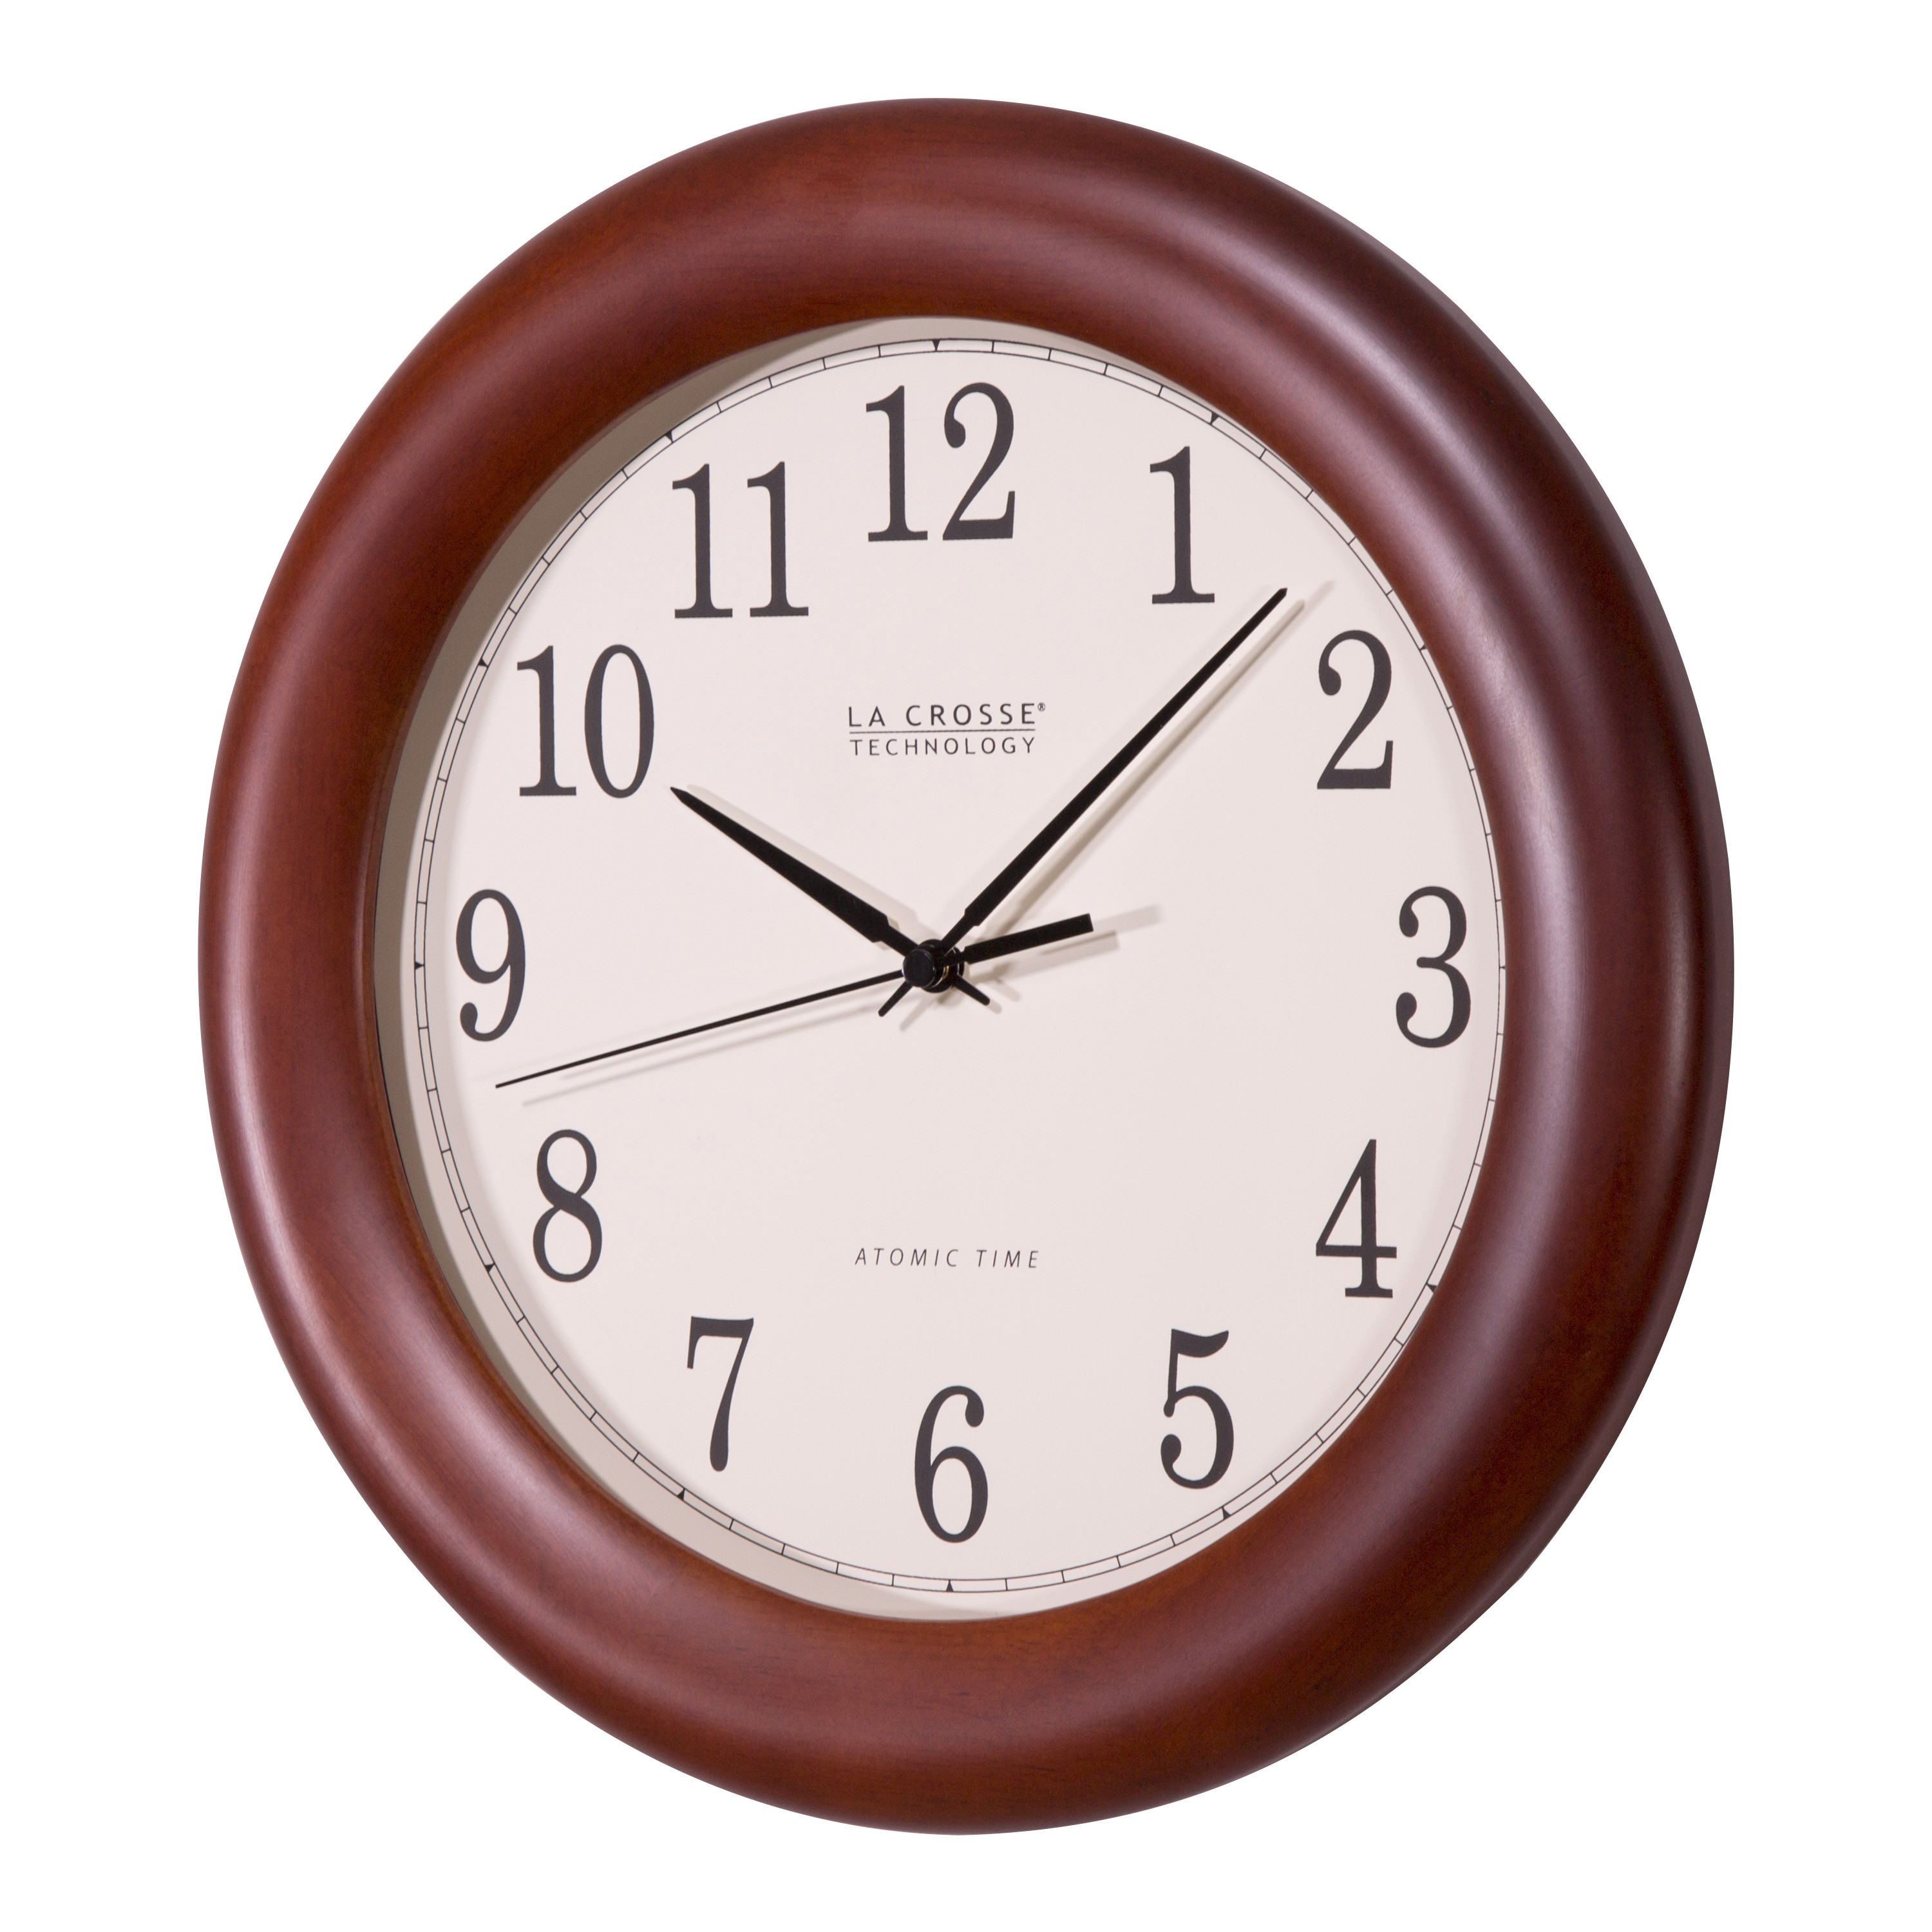 La Crosse WT-3122A-INT Atomic Clock, Round, Analog, Analog Display, Wood Frame, Cherry Frame - 2